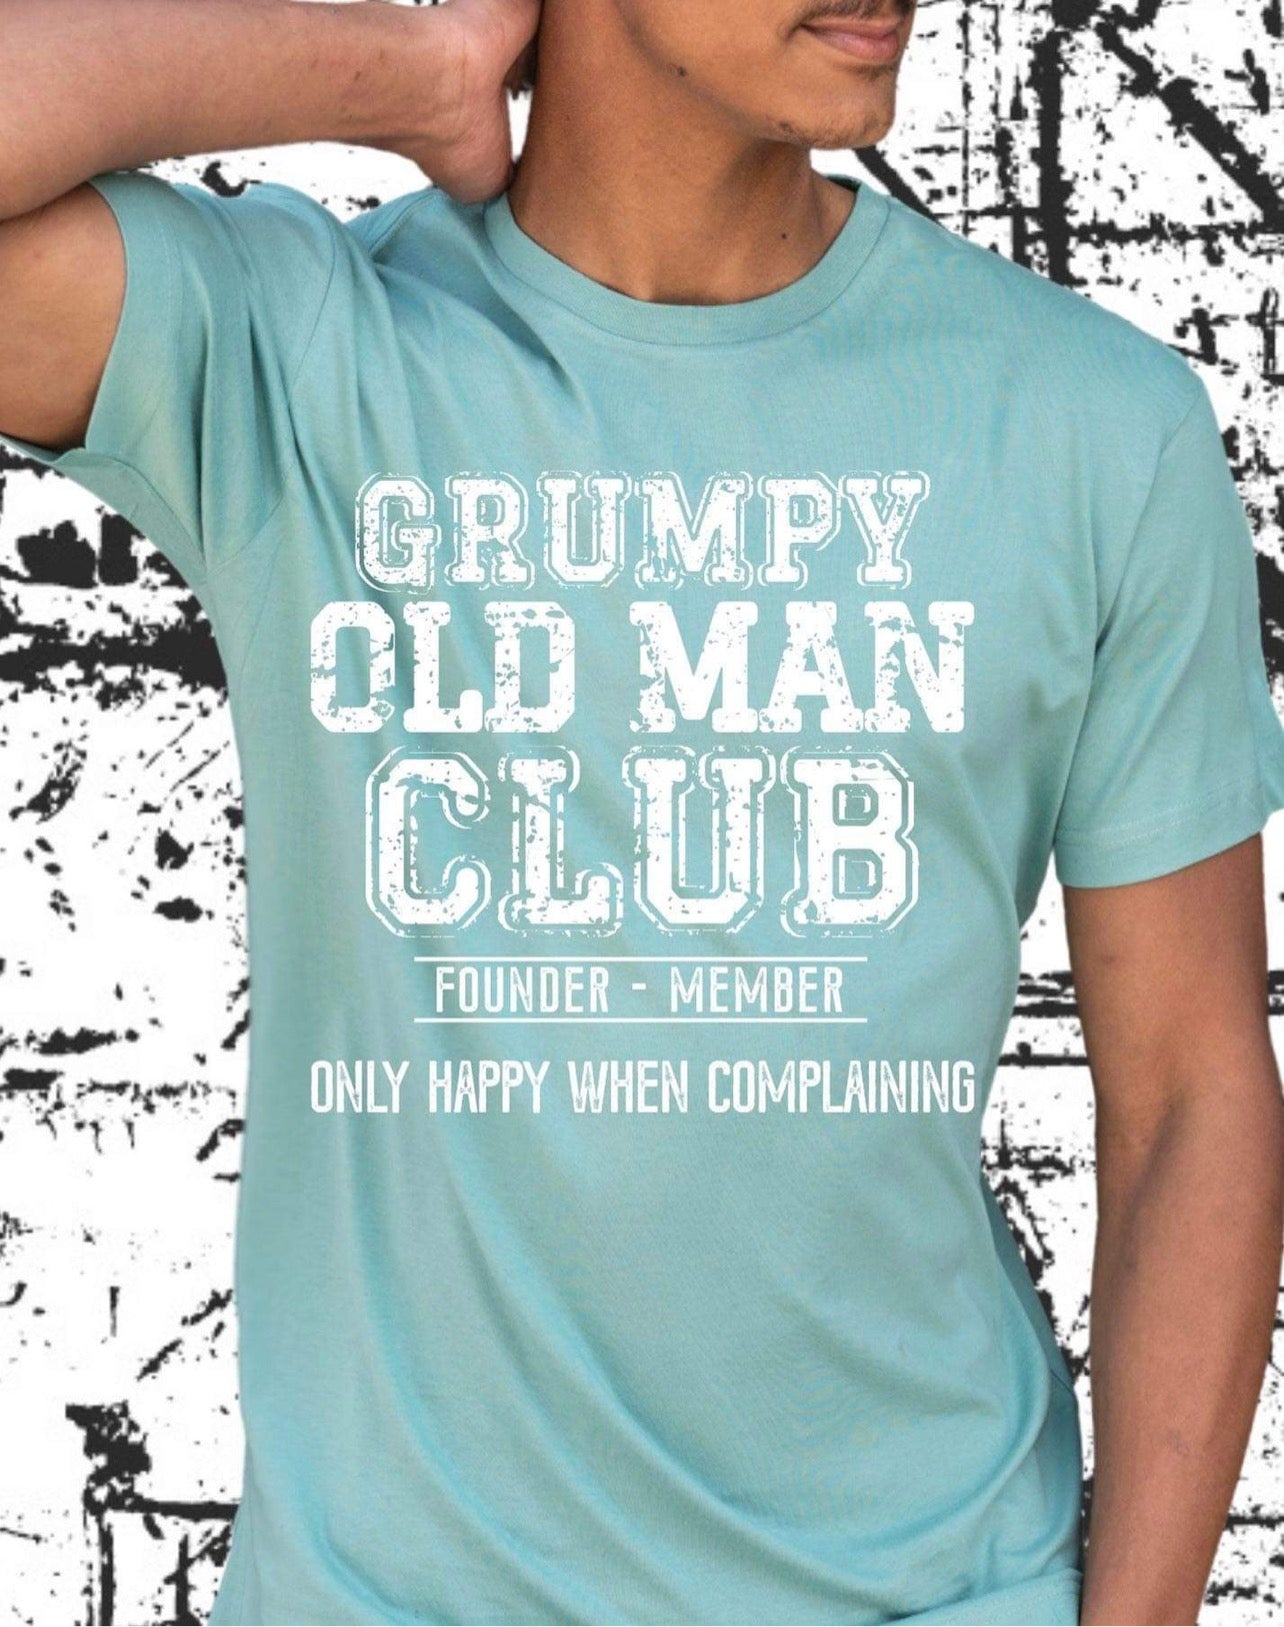 Grumpy Old Man Club T-Shirt